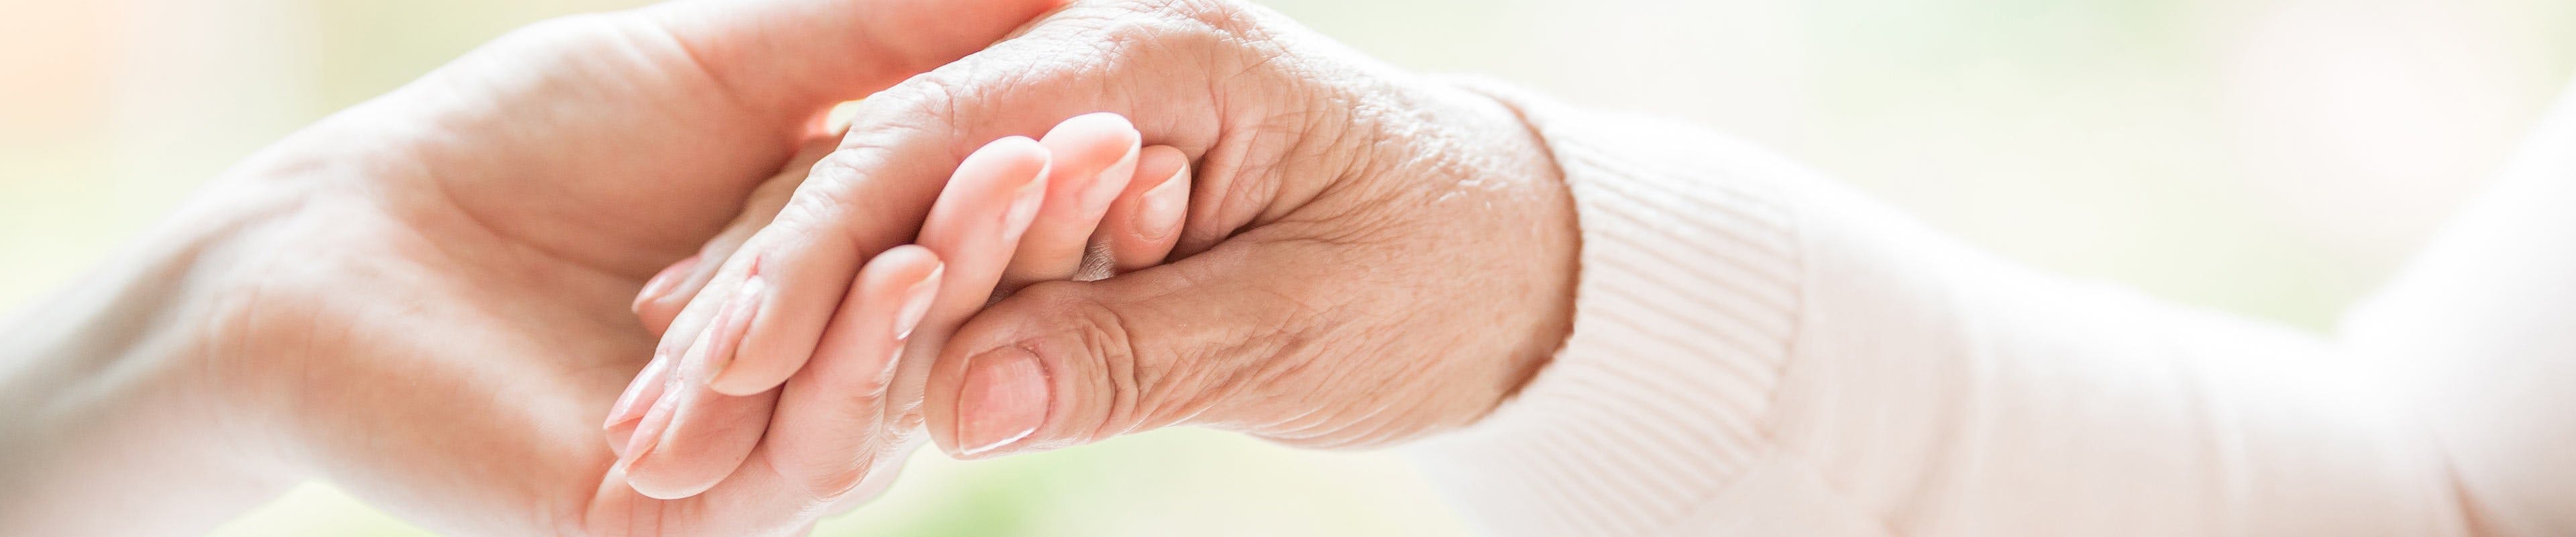 Respite caregiver holding hands of elderly patient